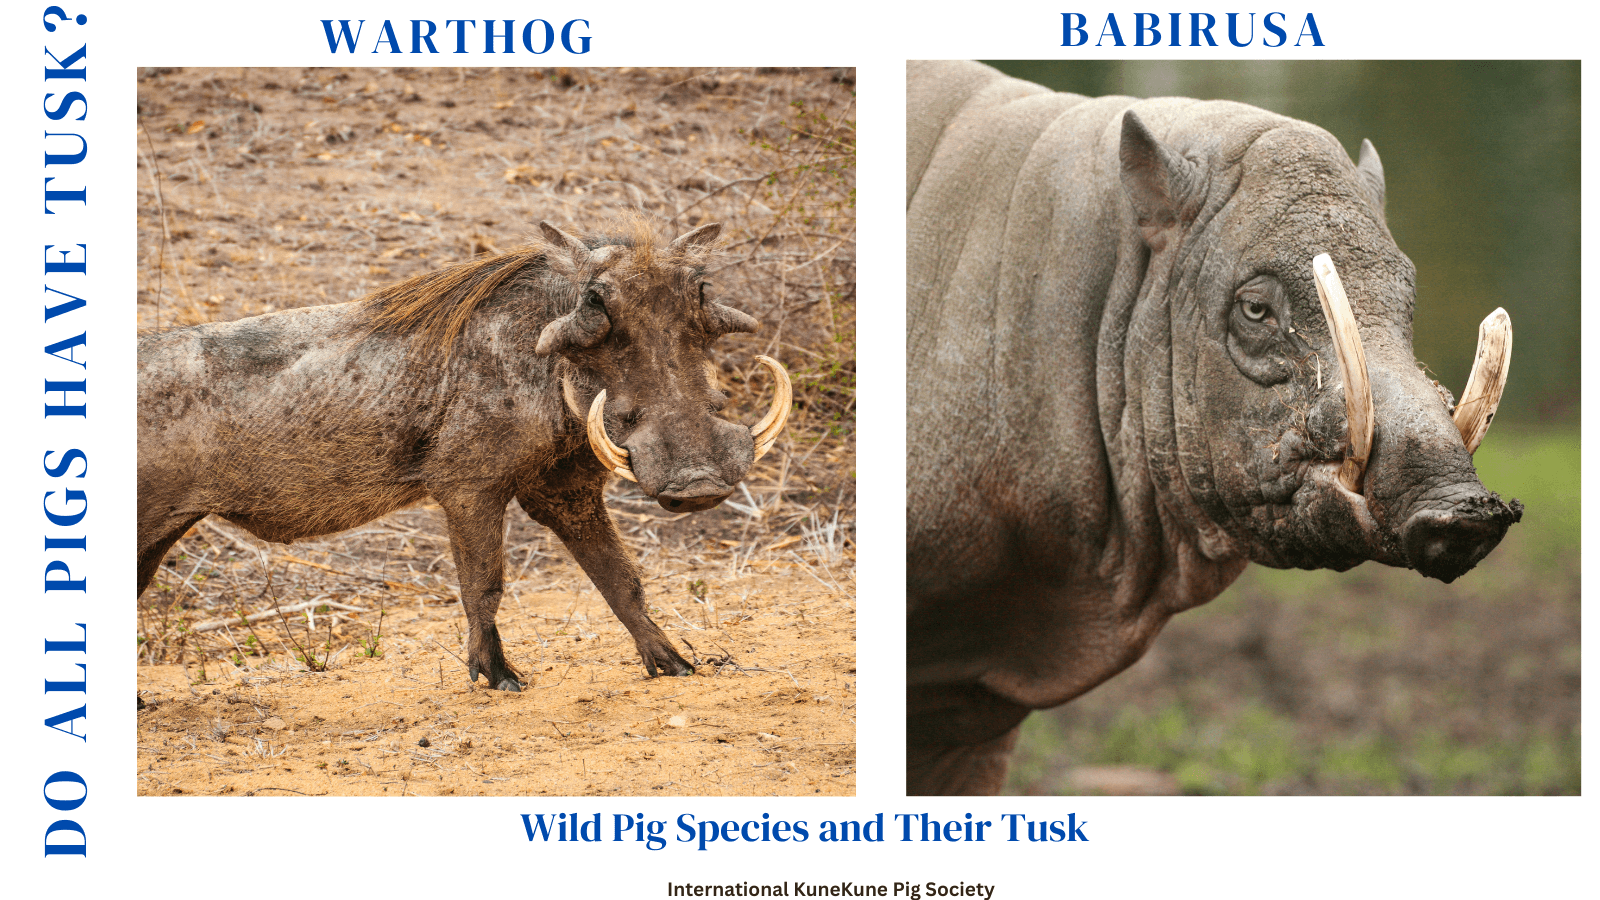 Tusk on wild species of pigs like Warthog and Babirusa